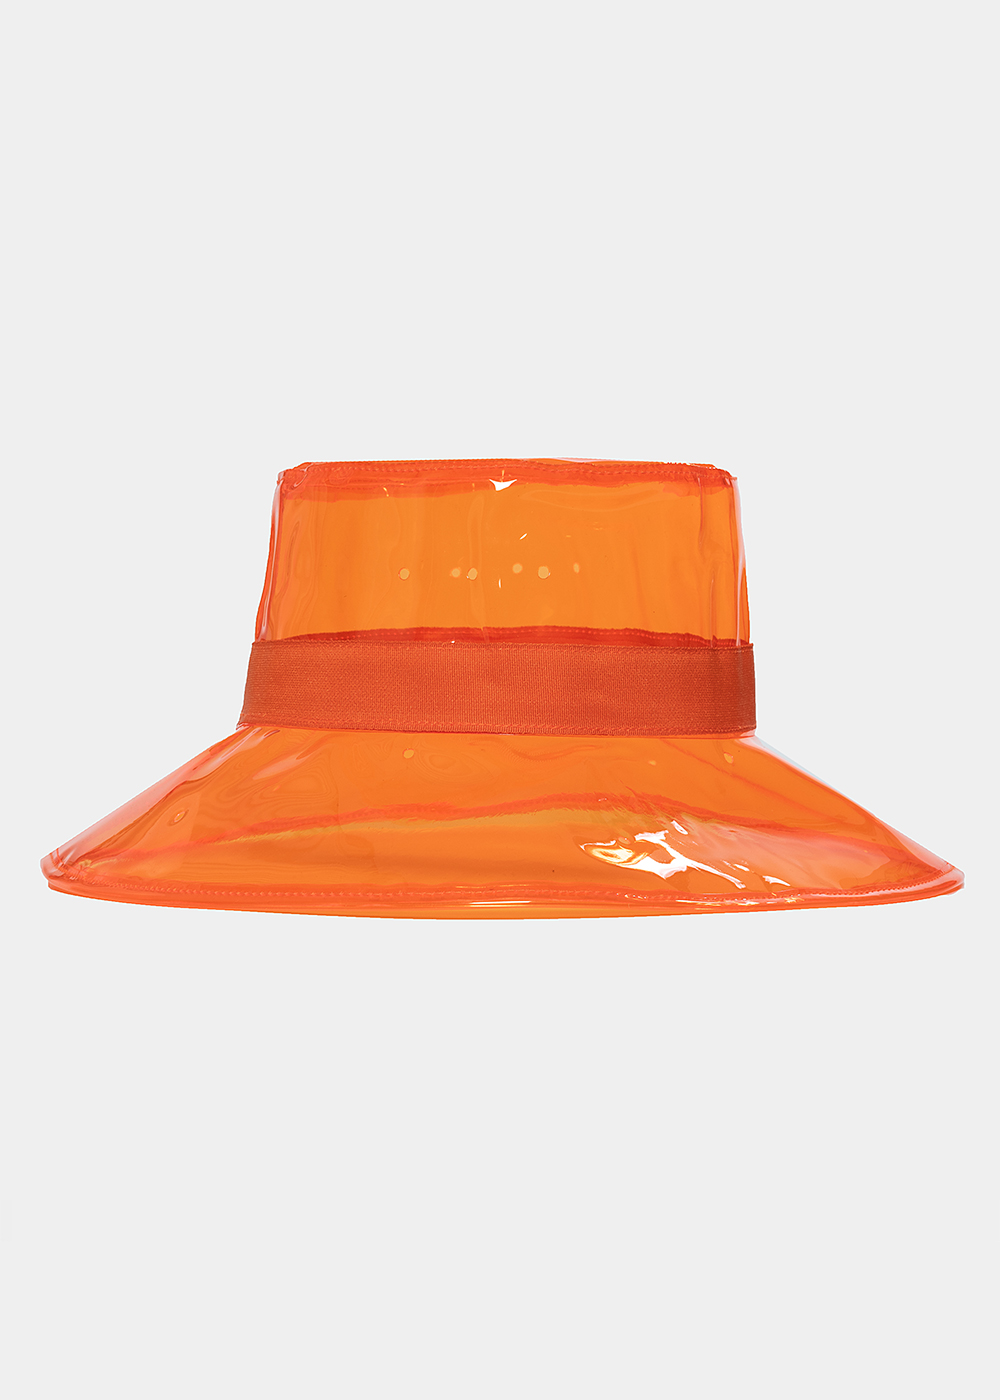 Orange vinyl hat